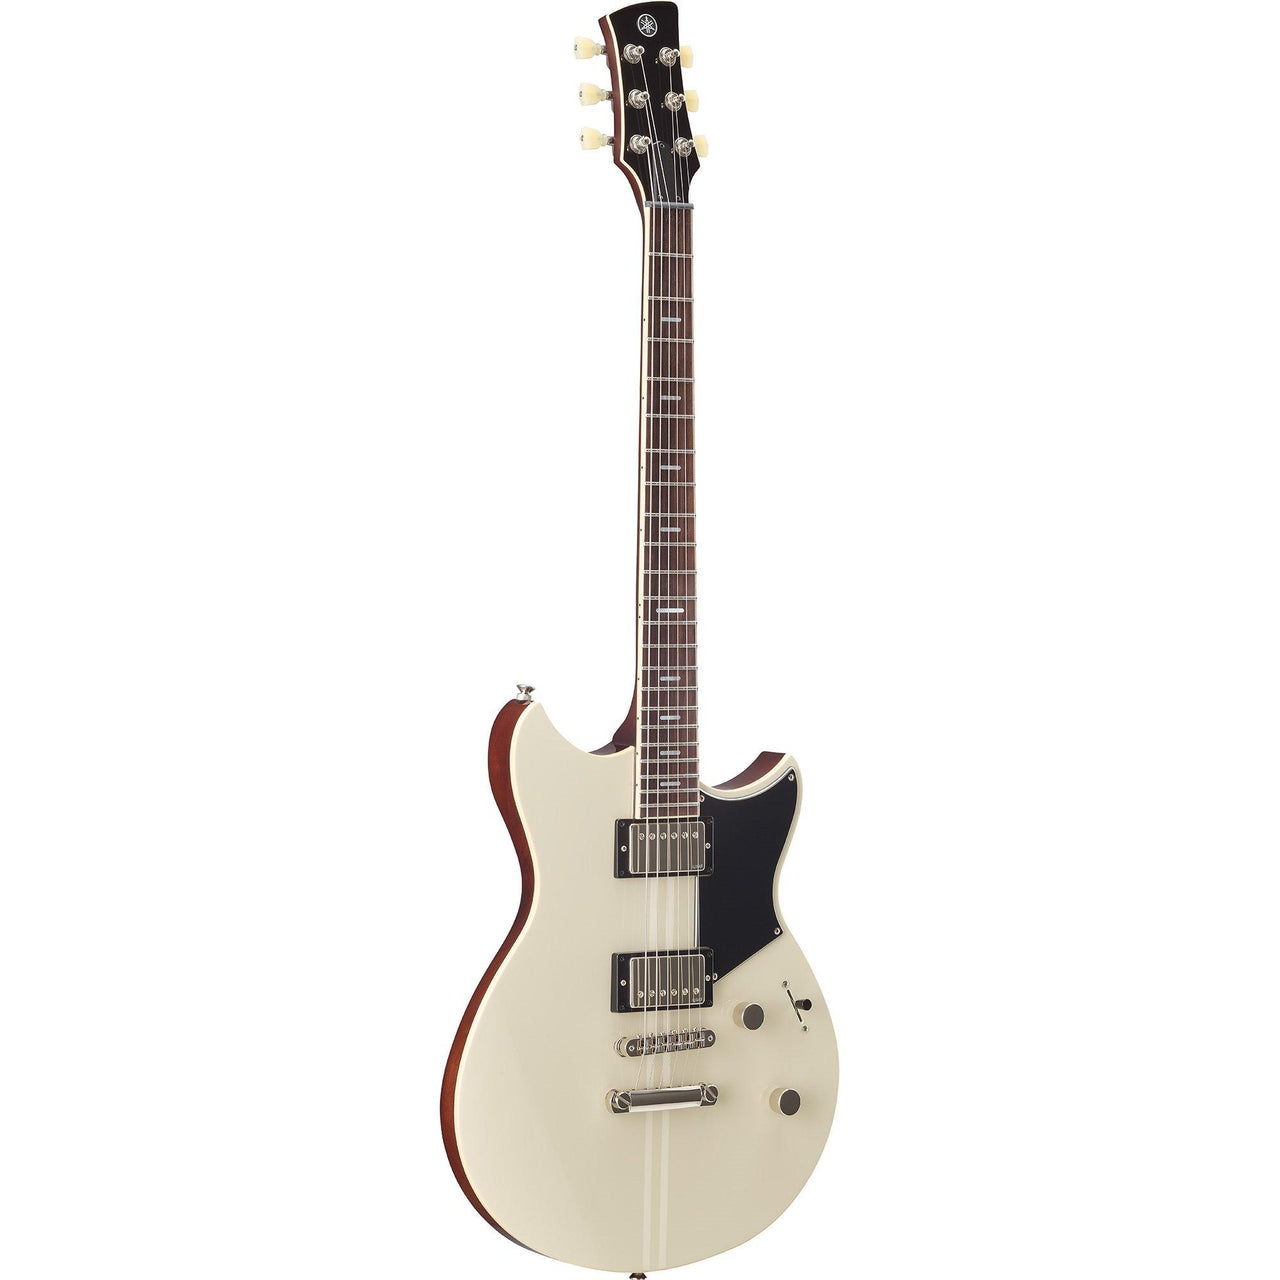 Guitarra Electrica Yamaha Revstar Standard Vintage White, Rss20vw